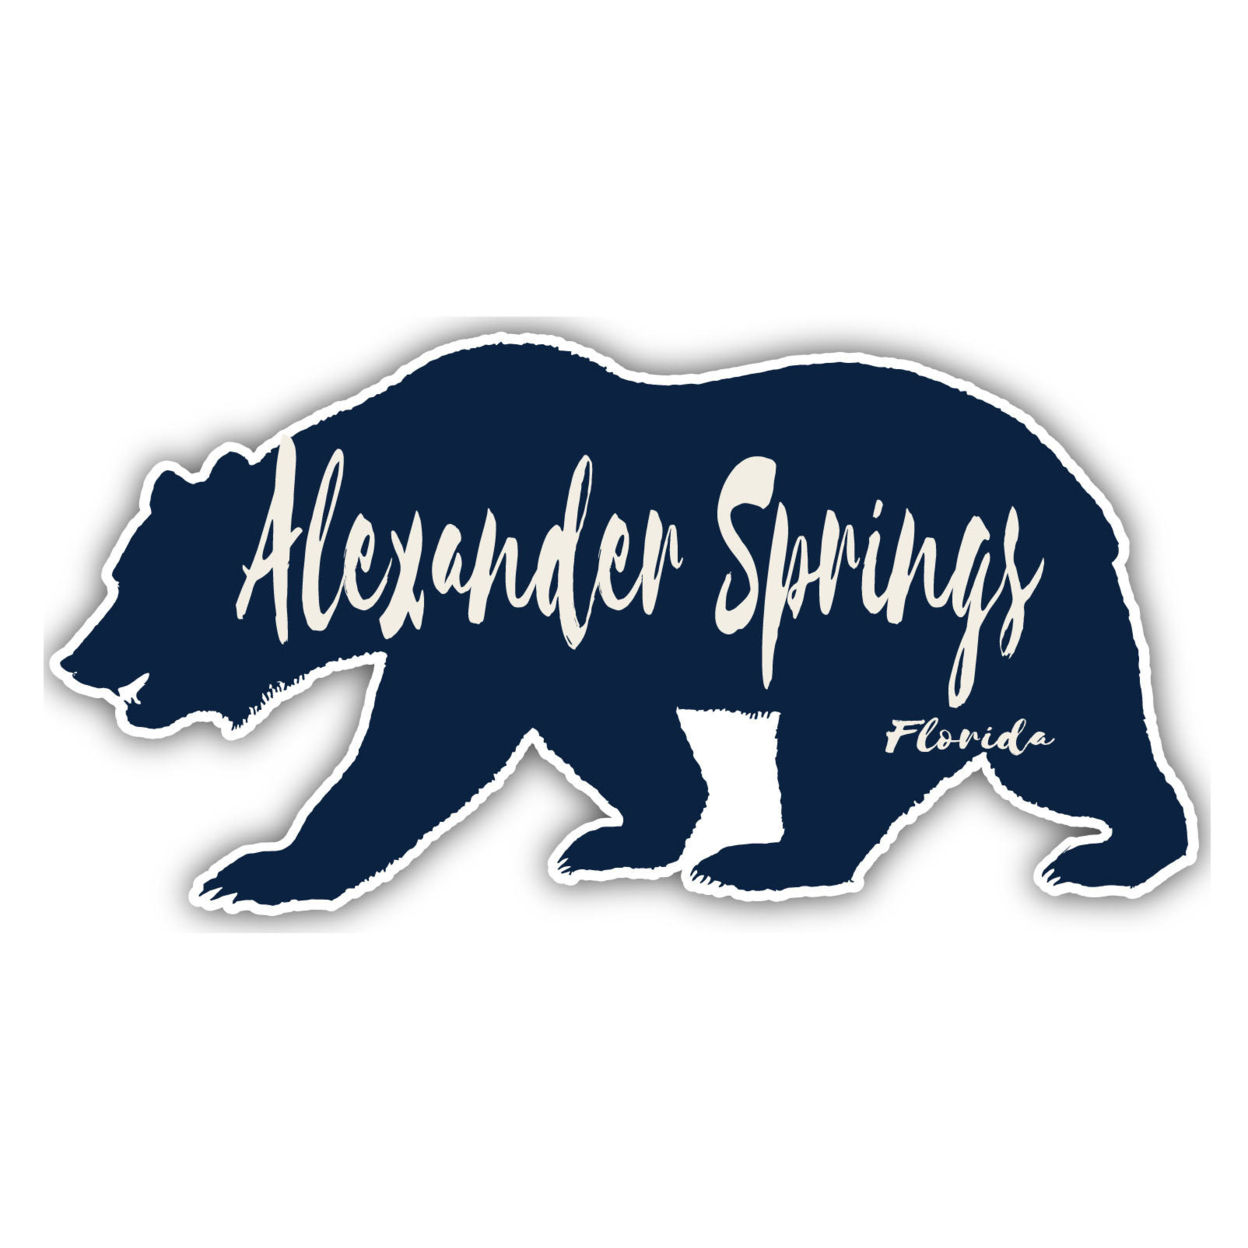 Alexander Springs Florida Souvenir Decorative Stickers (Choose Theme And Size) - Single Unit, 4-Inch, Tent